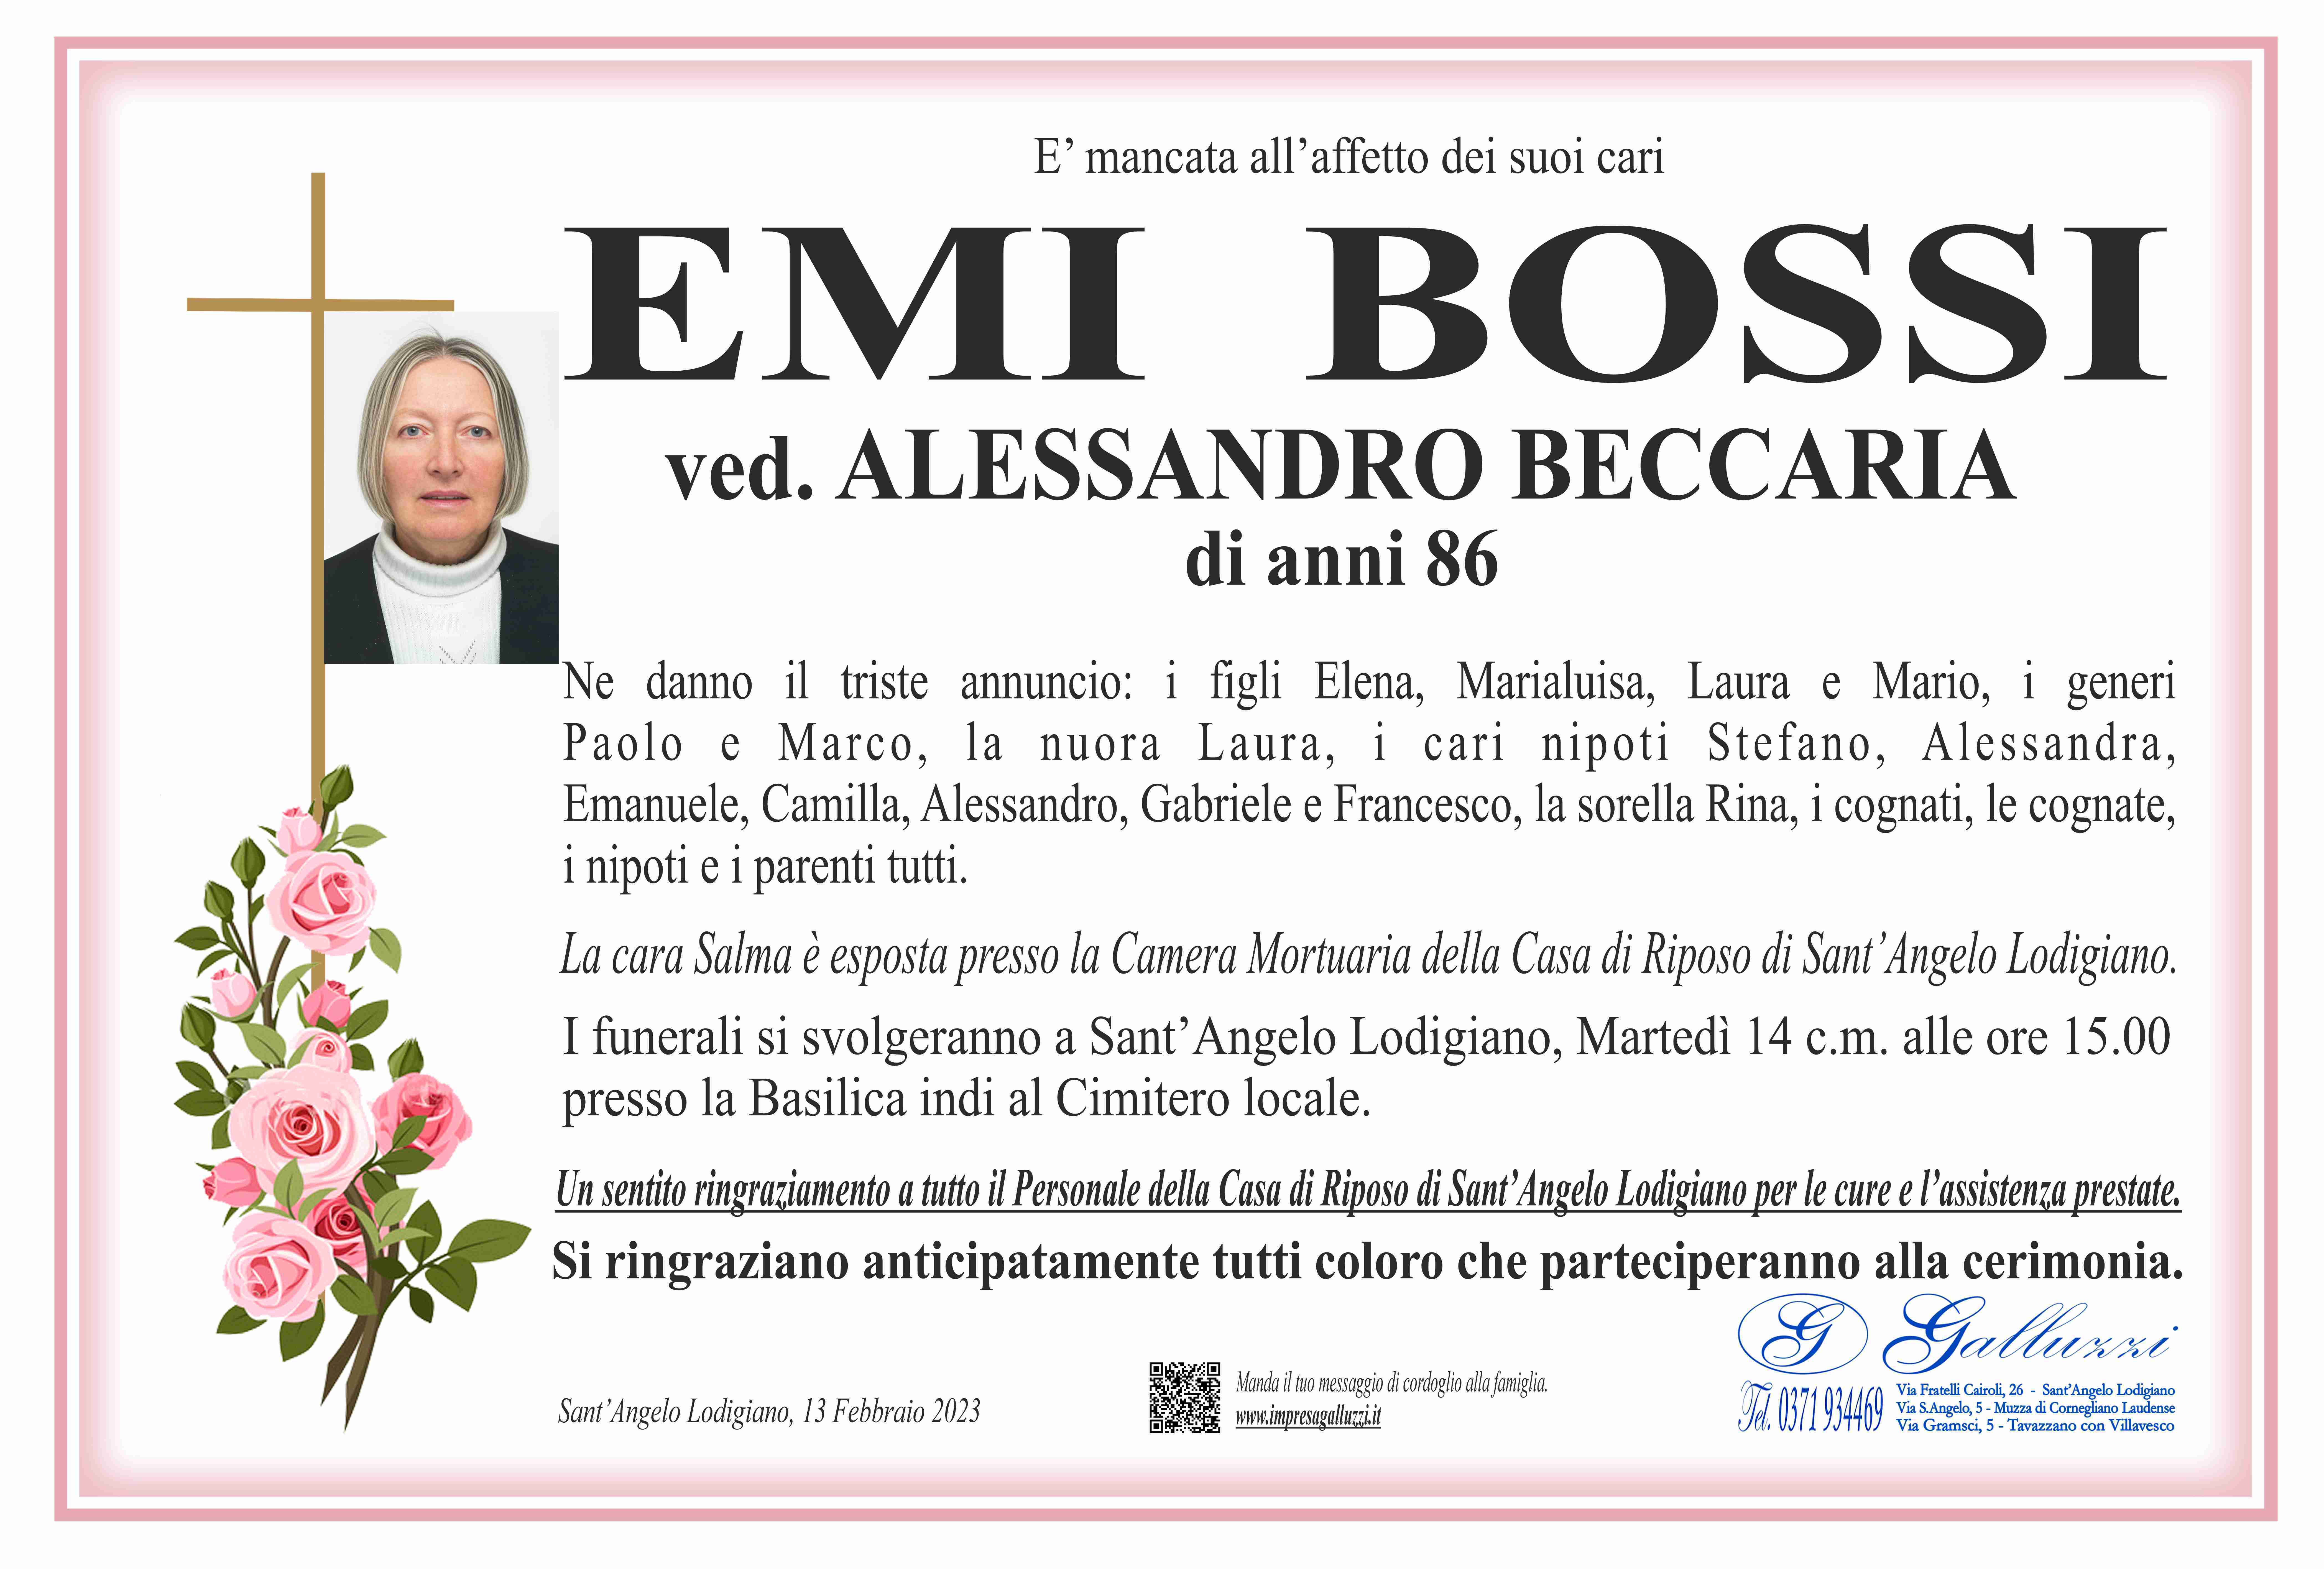 Gerolama Emilia Bossi